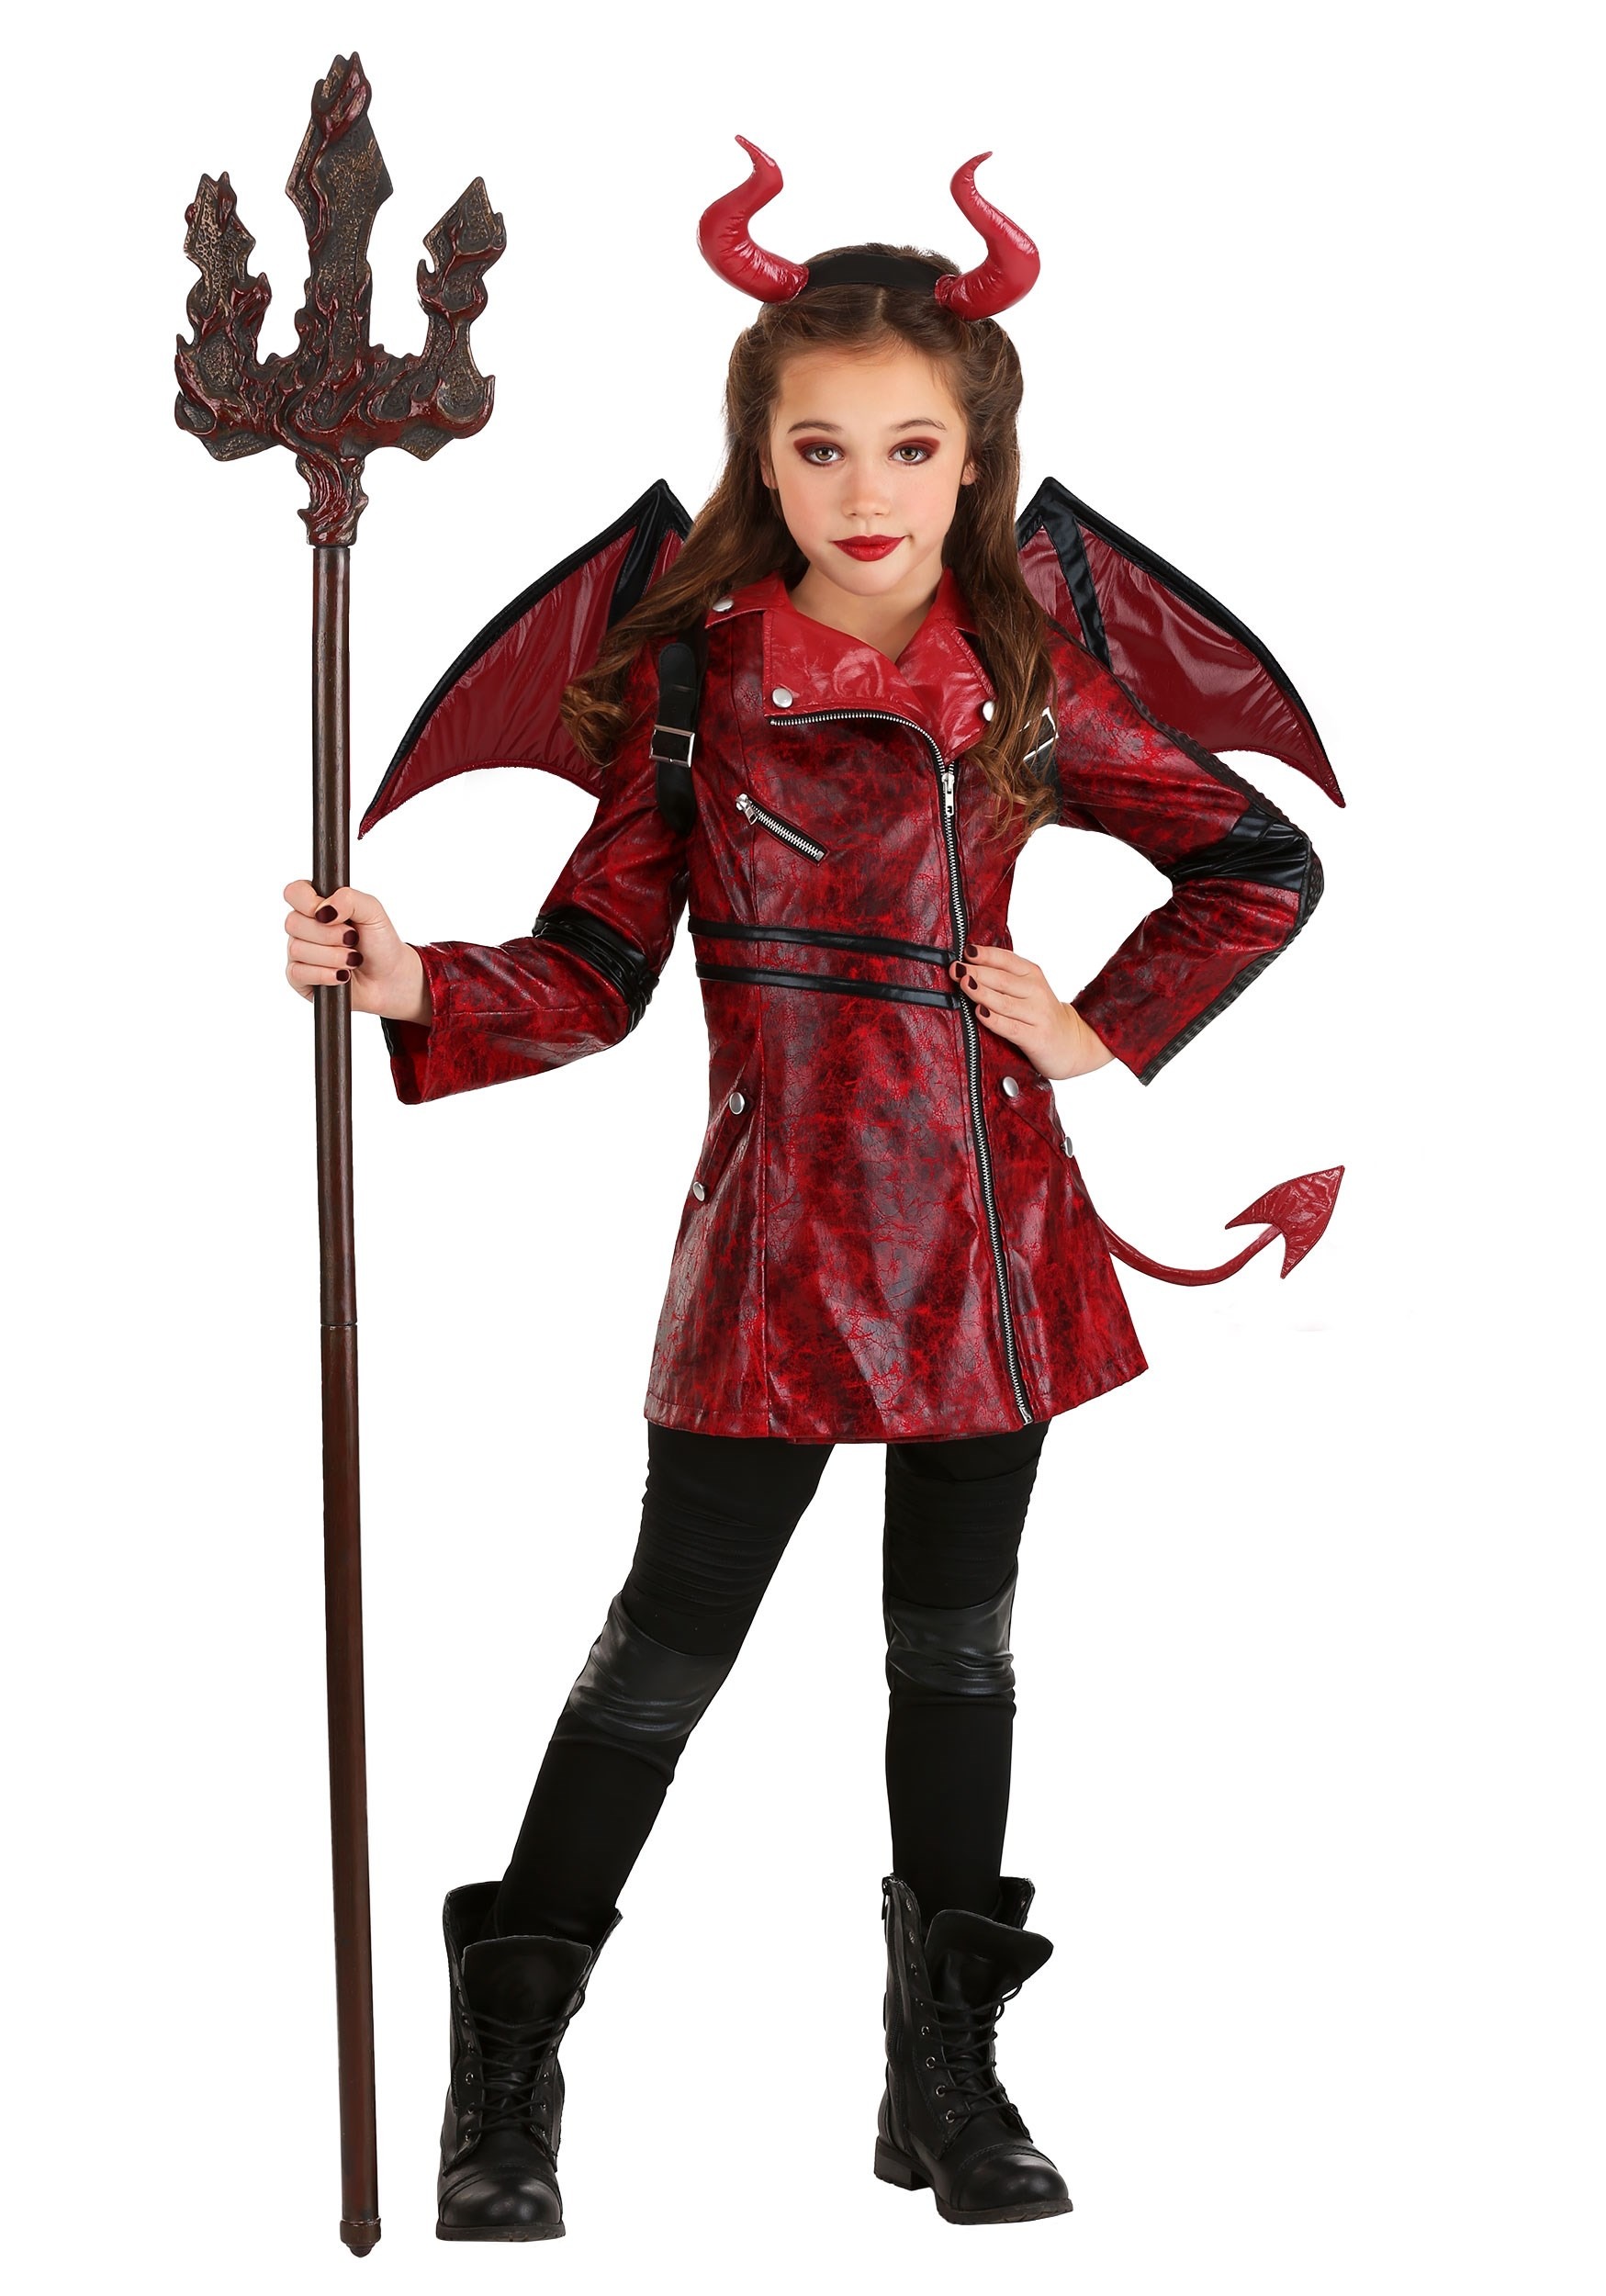 Girl's Leather Devil Costume